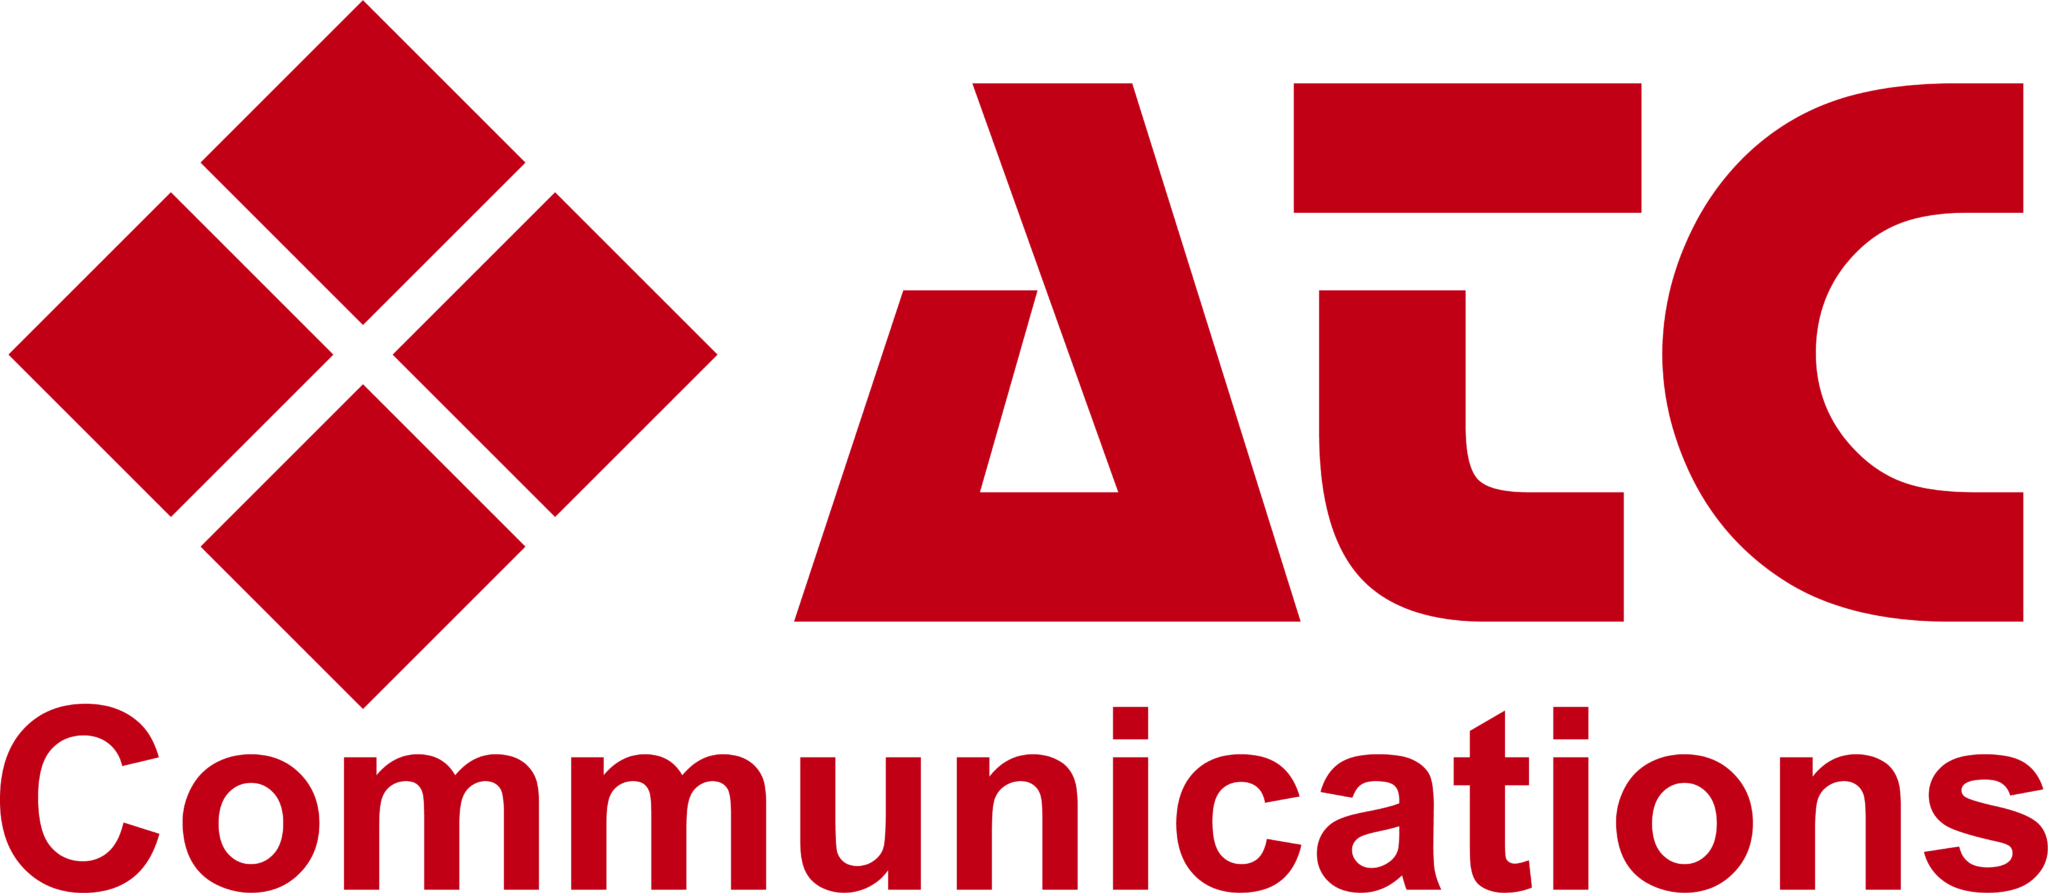 New Email Login - ATC Communications